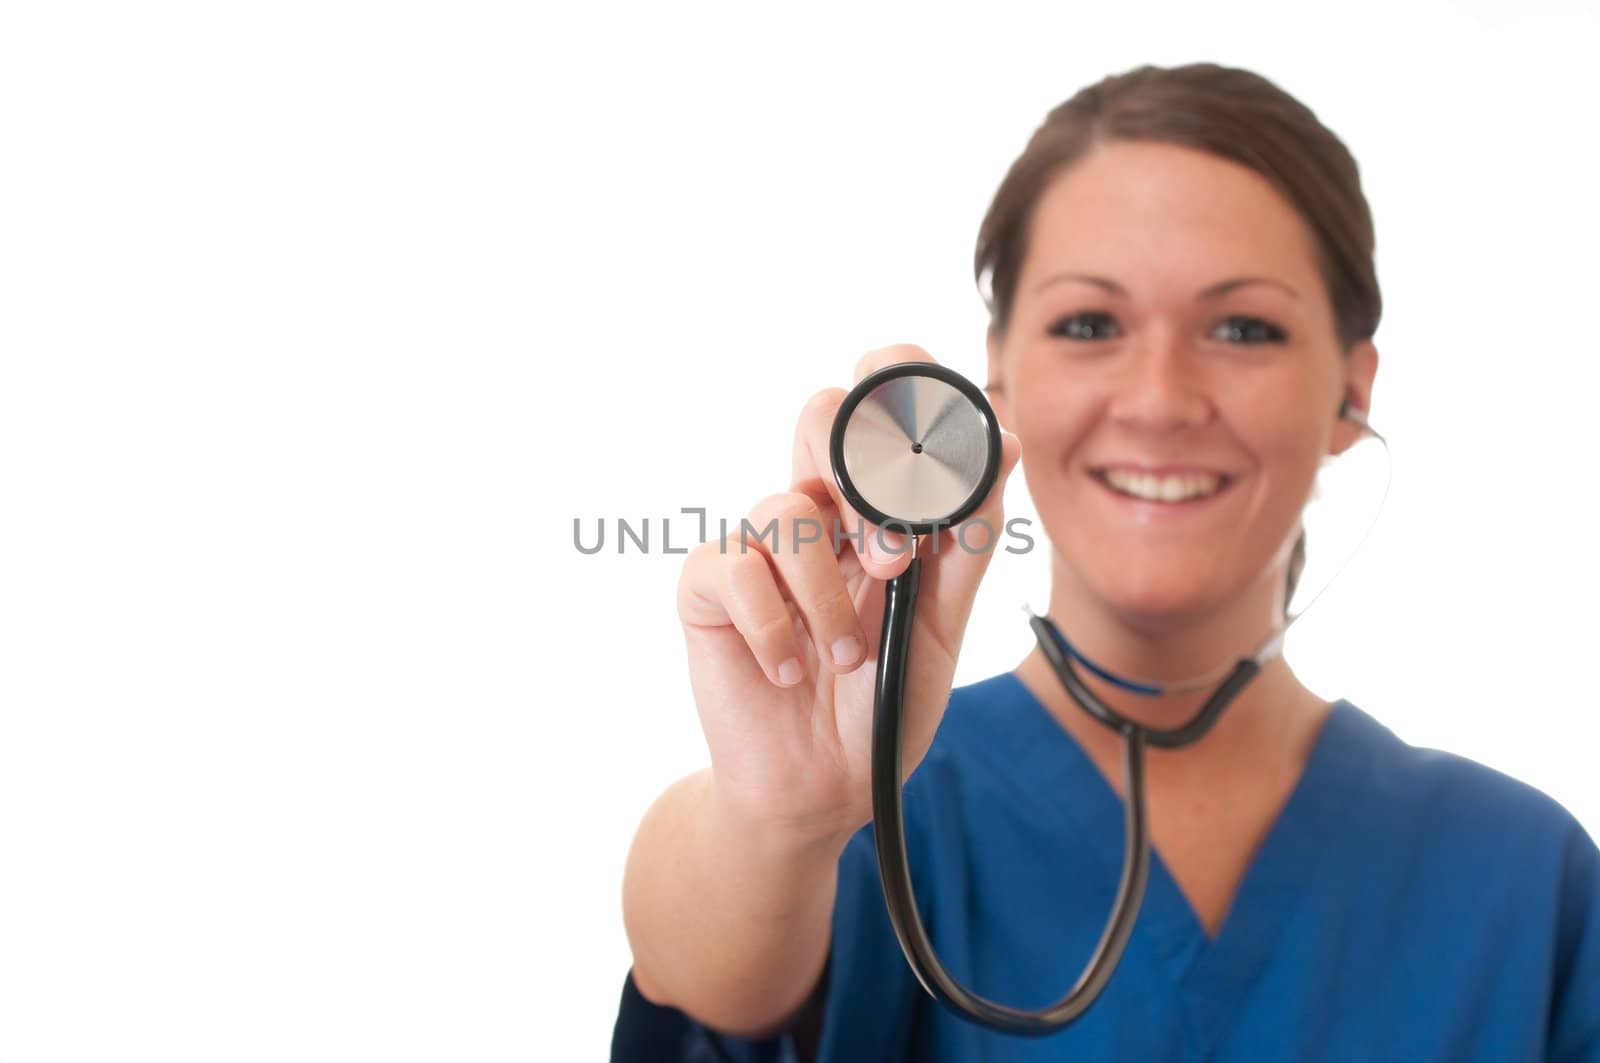 Female Nurse with Stethoscope Isolated by dehooks